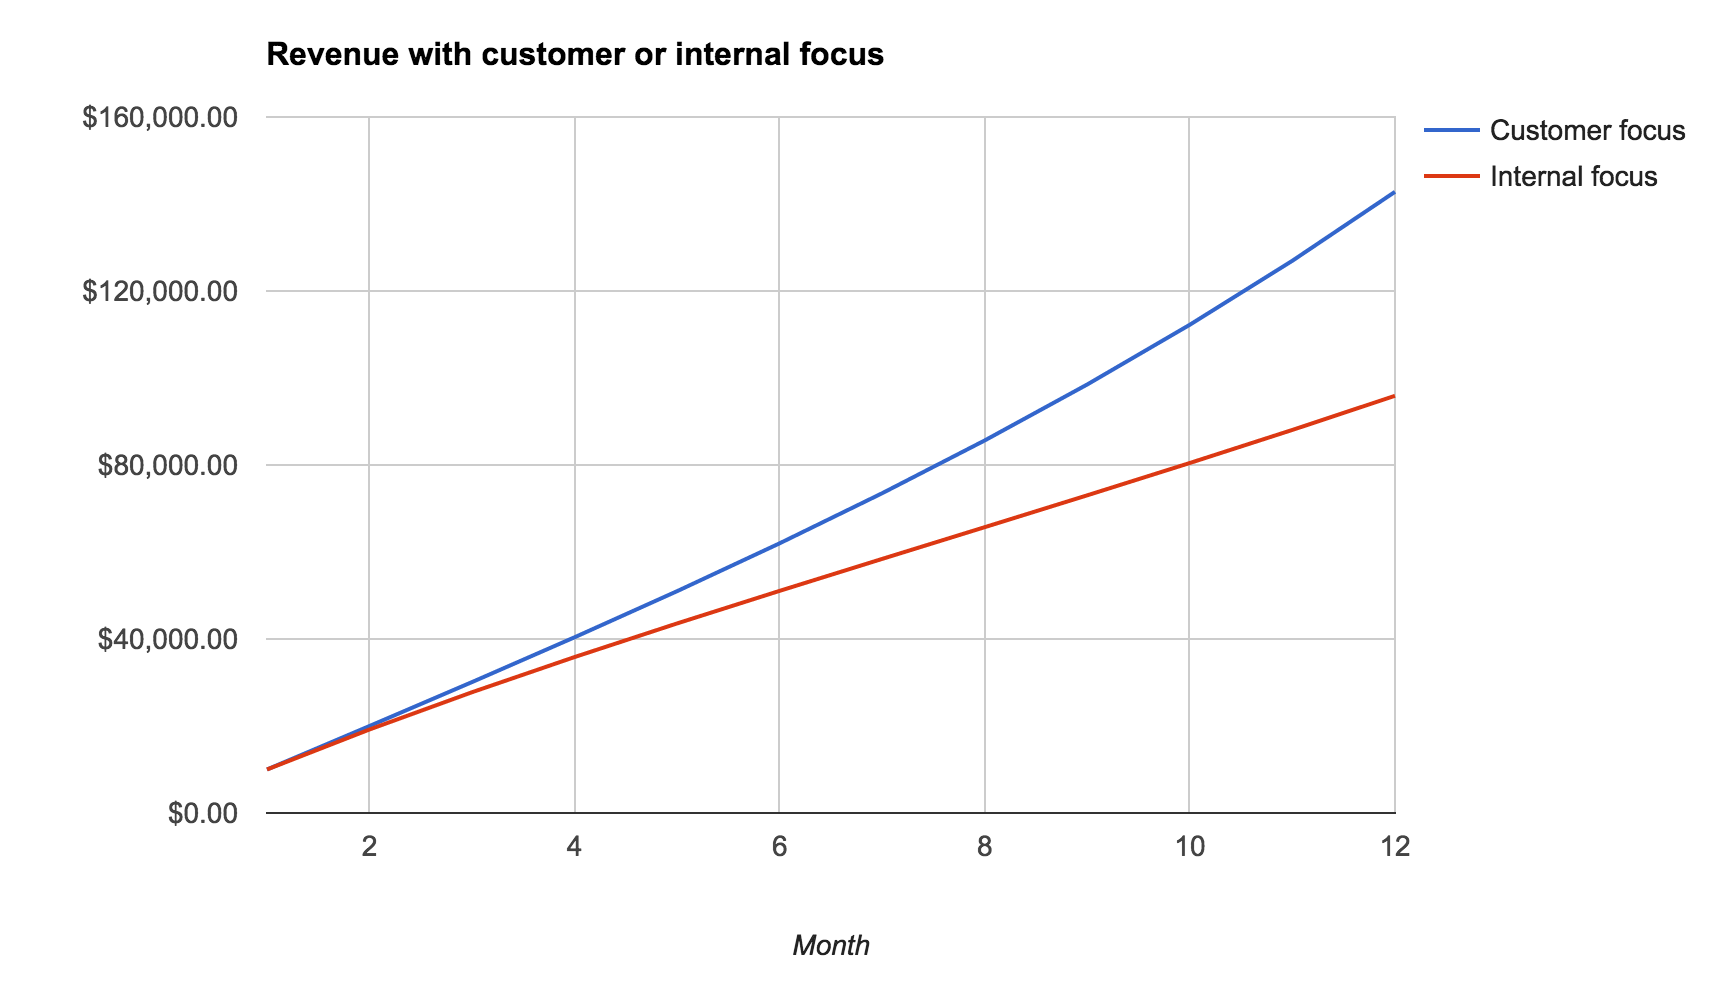 Revenue graph for customer focused vs internal focused companies